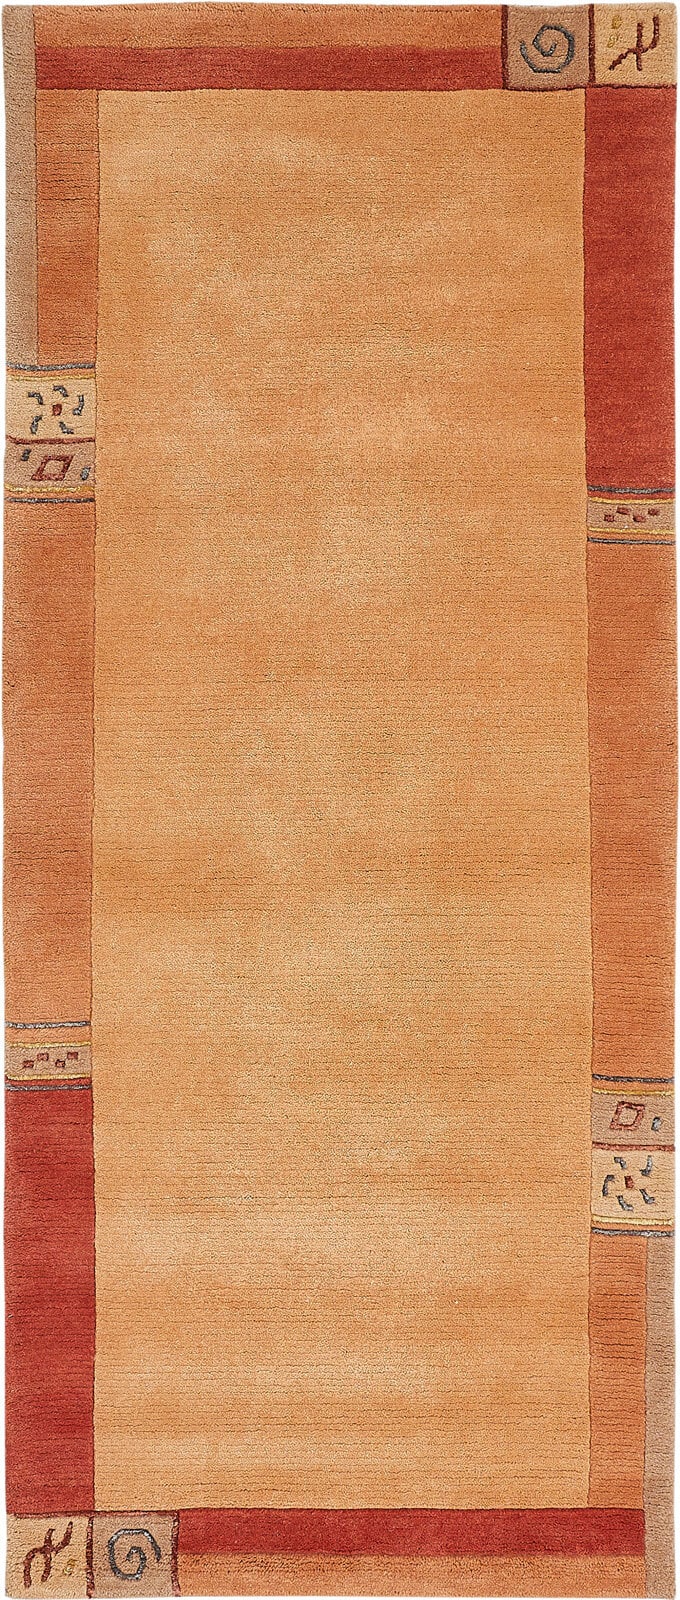 Teppich MANALI 80 x 200 cm orange